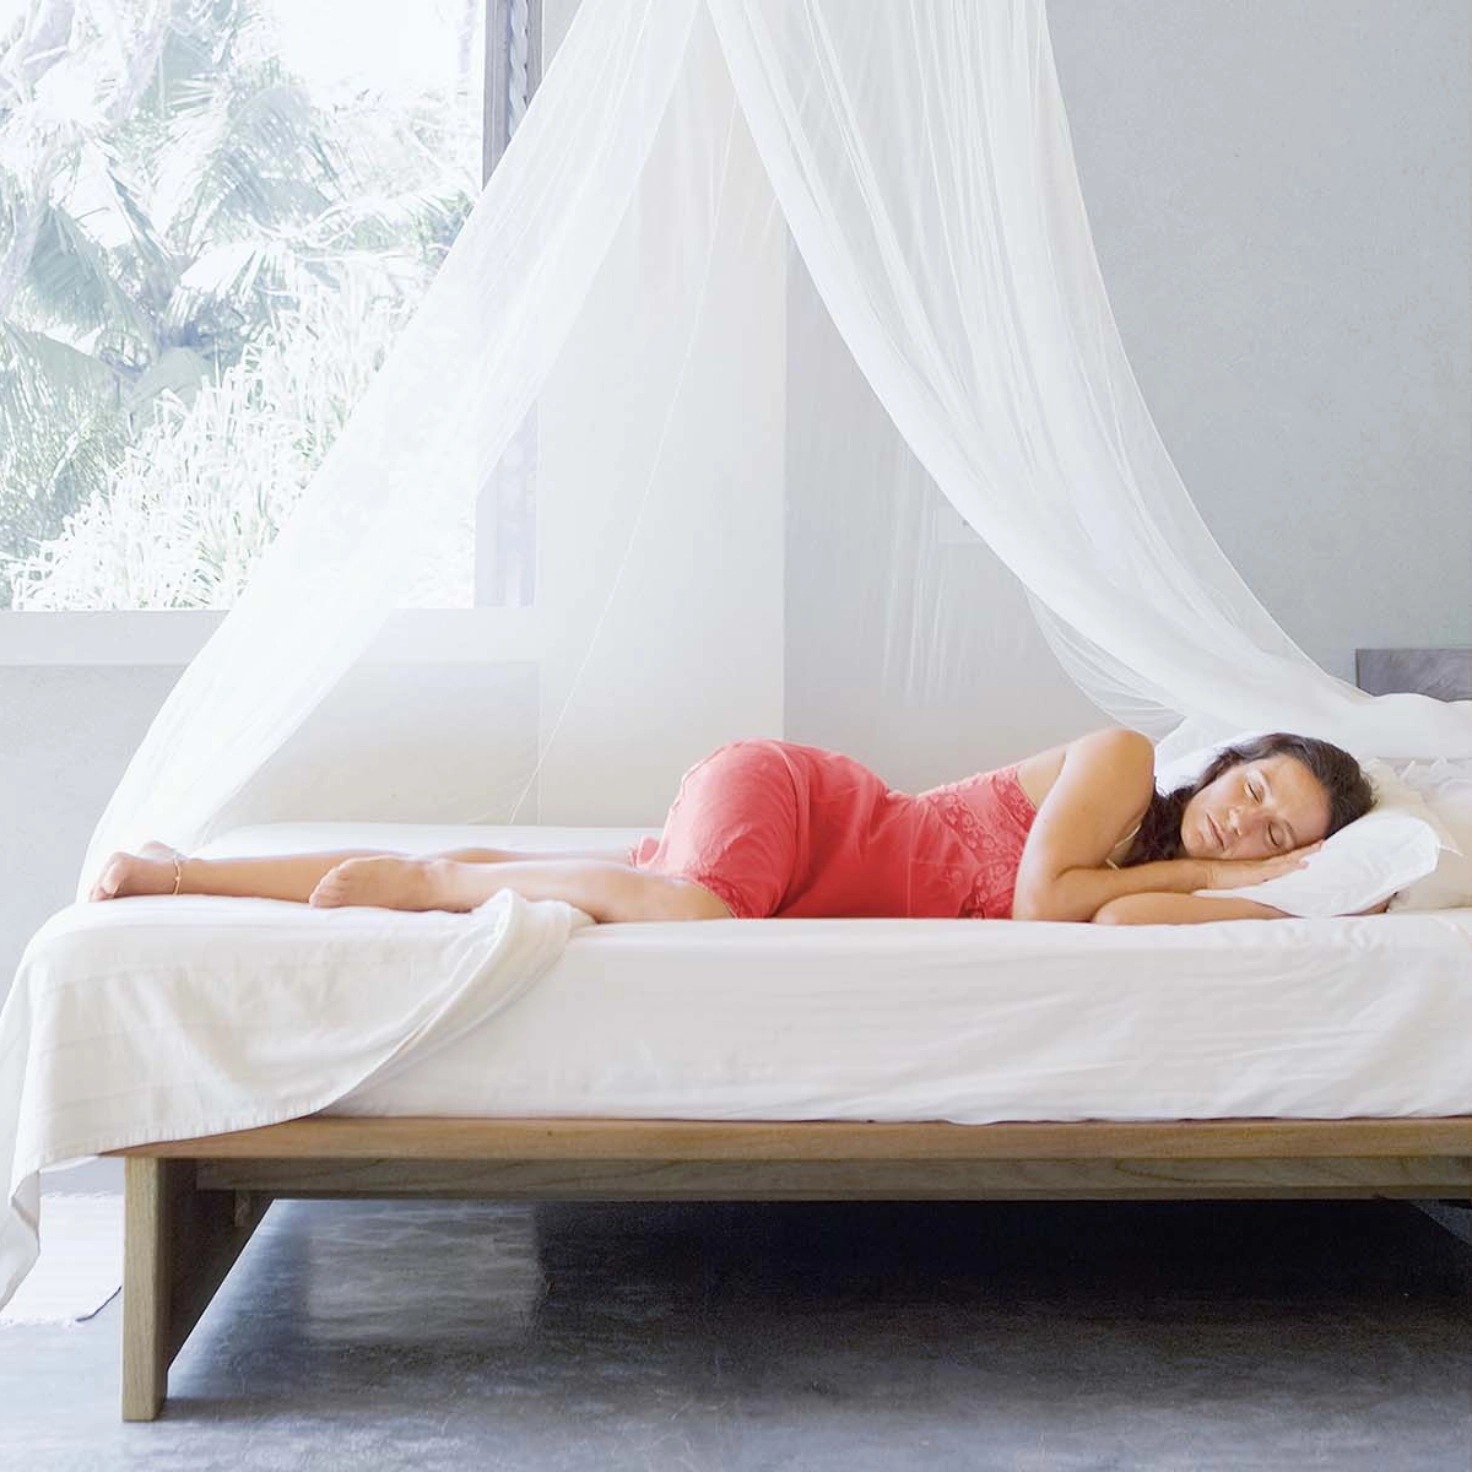 A woman sleeps under a mosquito net in summer.